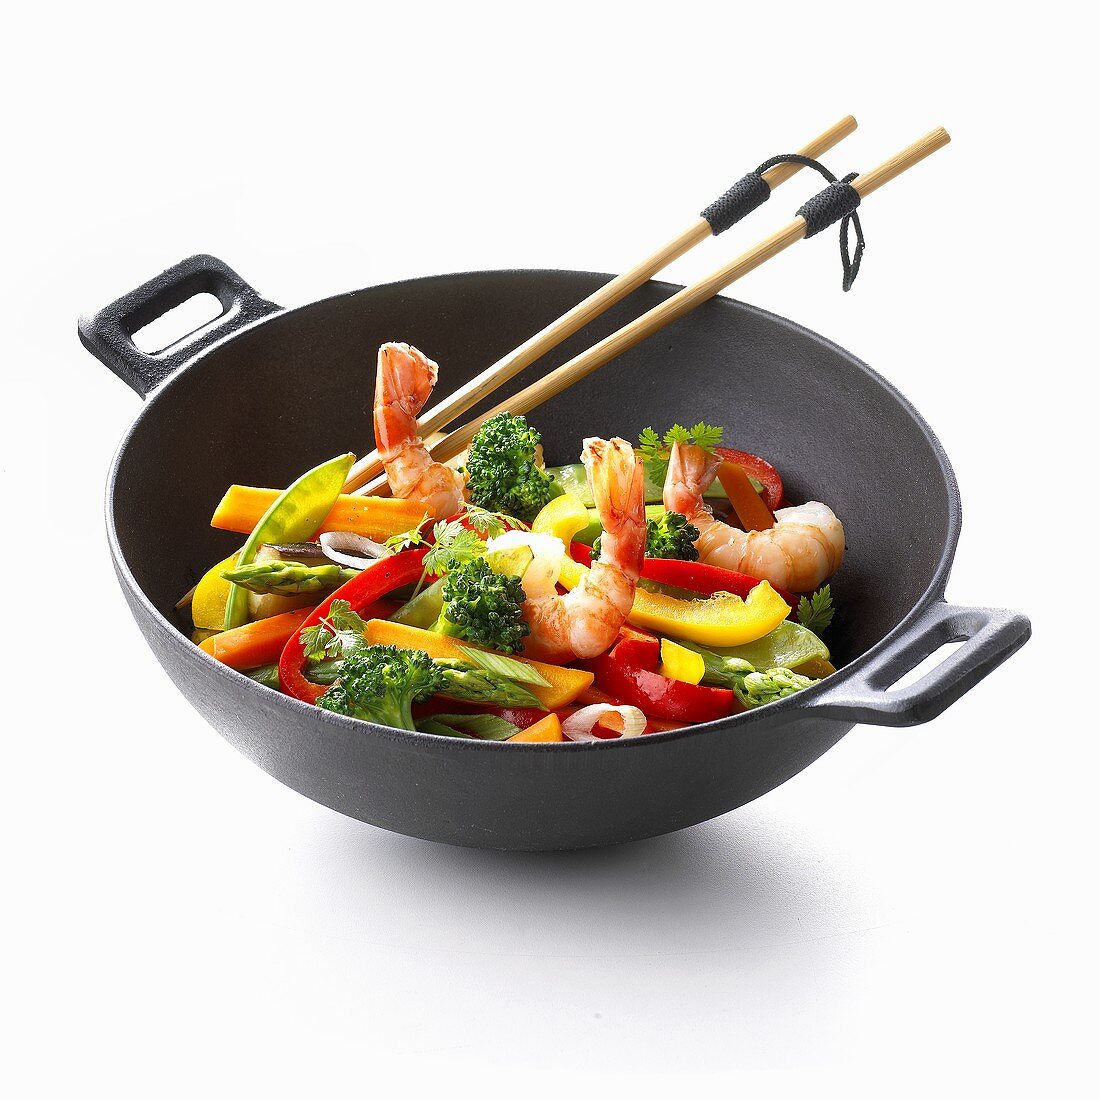 Wok with vegetables and shrimps, chopsticks